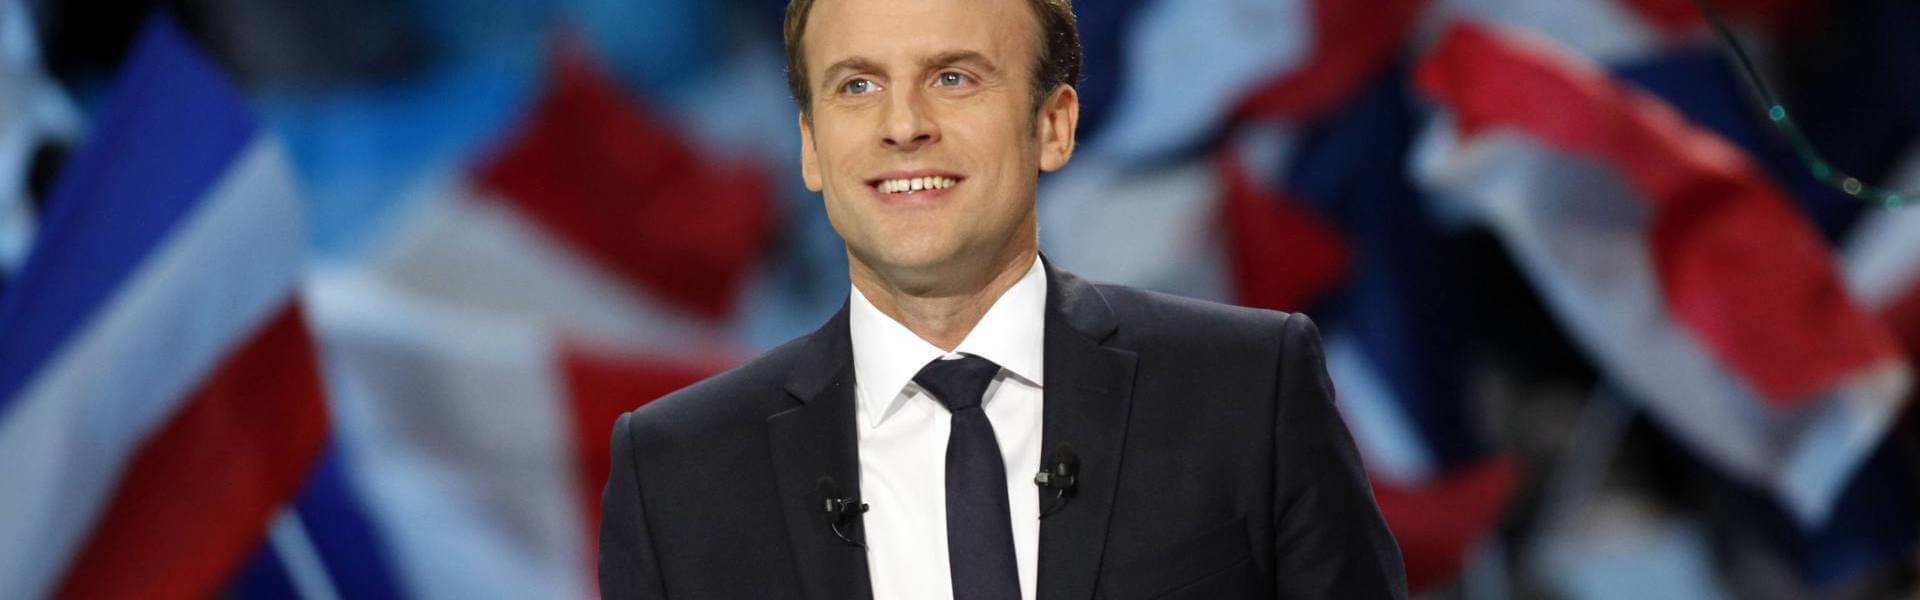 Macron still leads a tightening presidential race